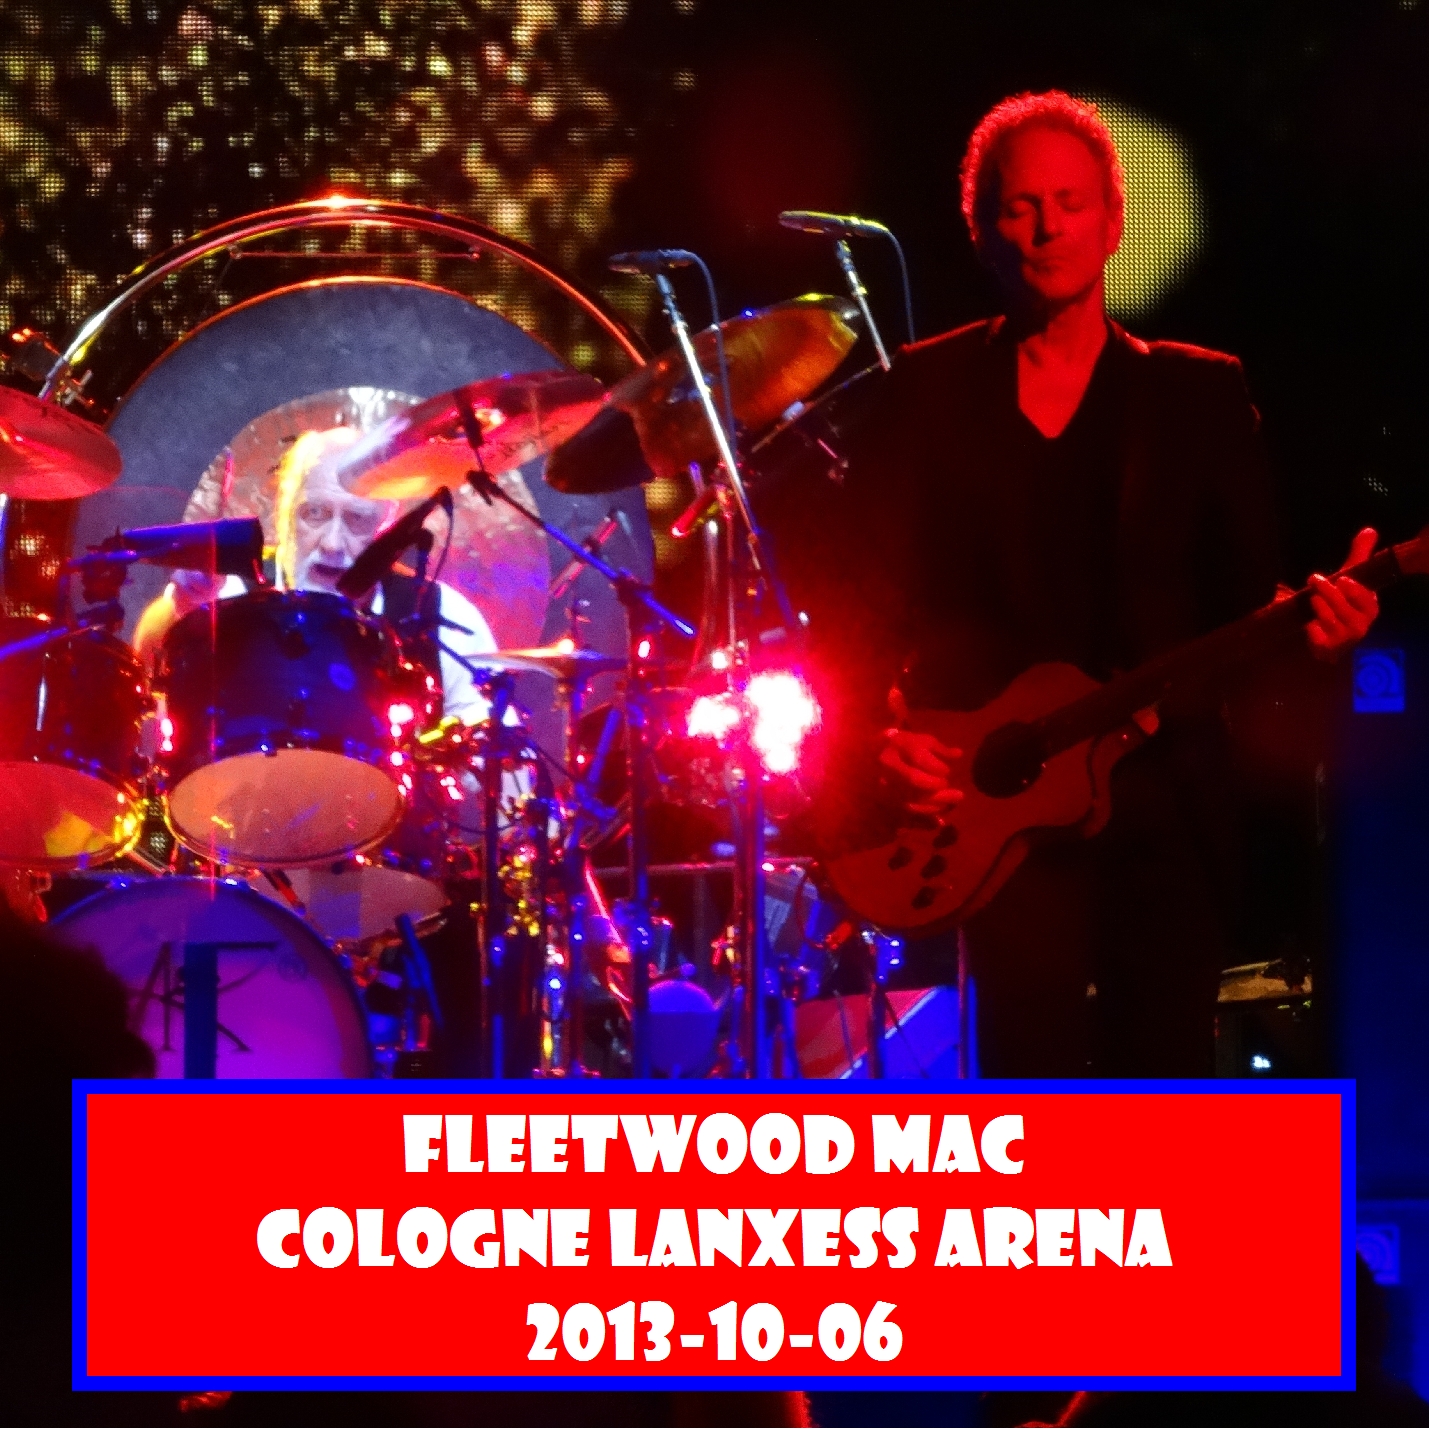 FleetwoodMac2013-10-06LanxessArenaCologneGermany (1).jpg